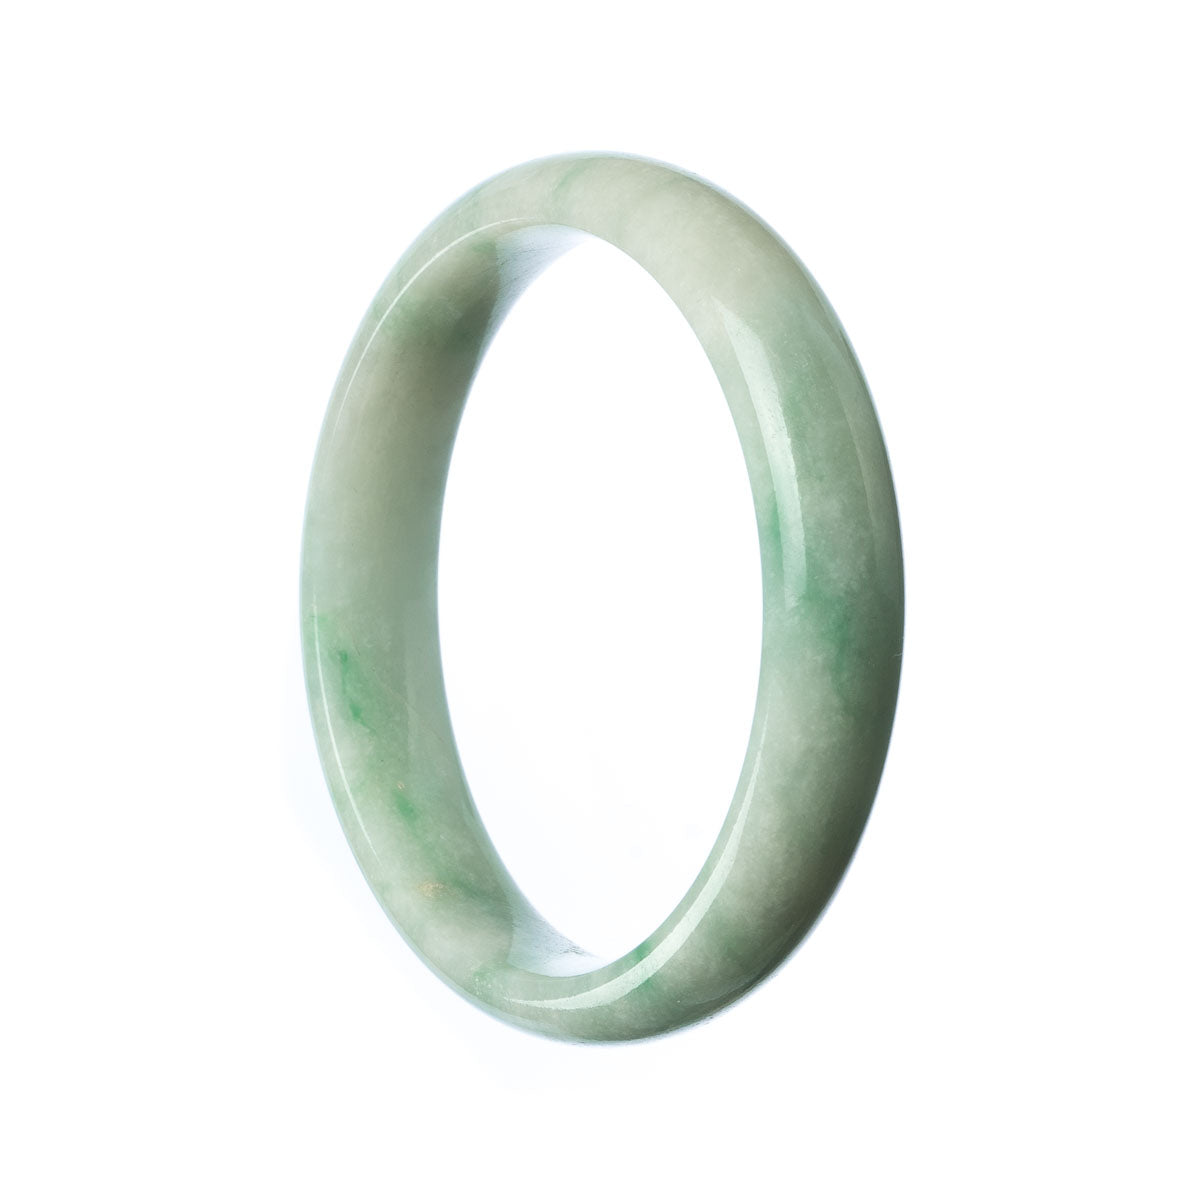 A pale green Burma jade bangle bracelet with a half moon shape, measuring 57mm in diameter.